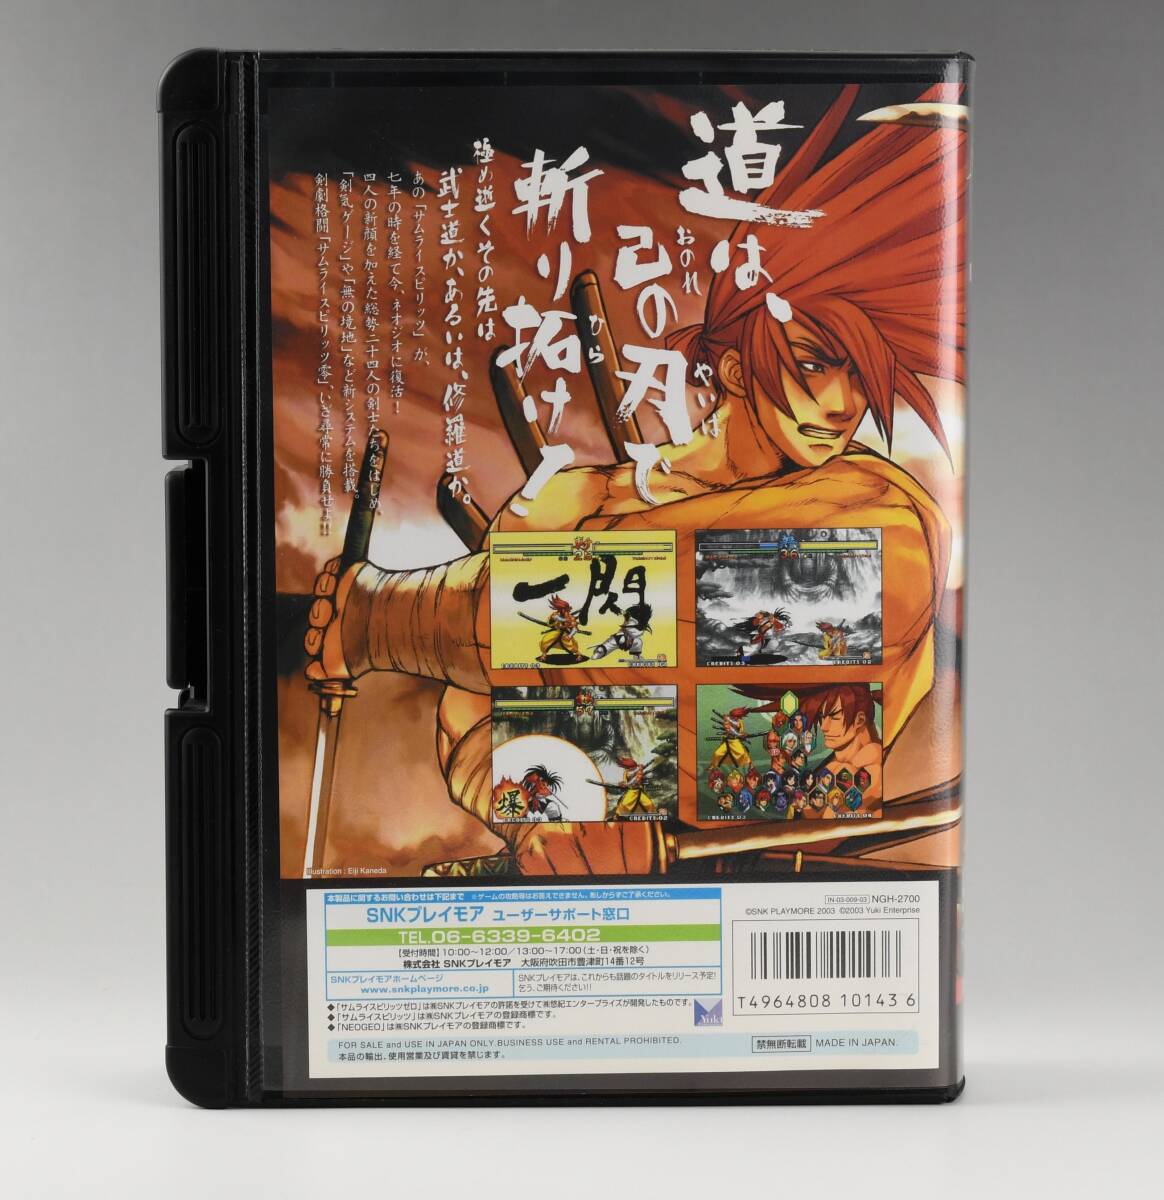 SNK Play moa Samurai Spirits 0 NEOGEO ROM cartridge used beautiful goods 